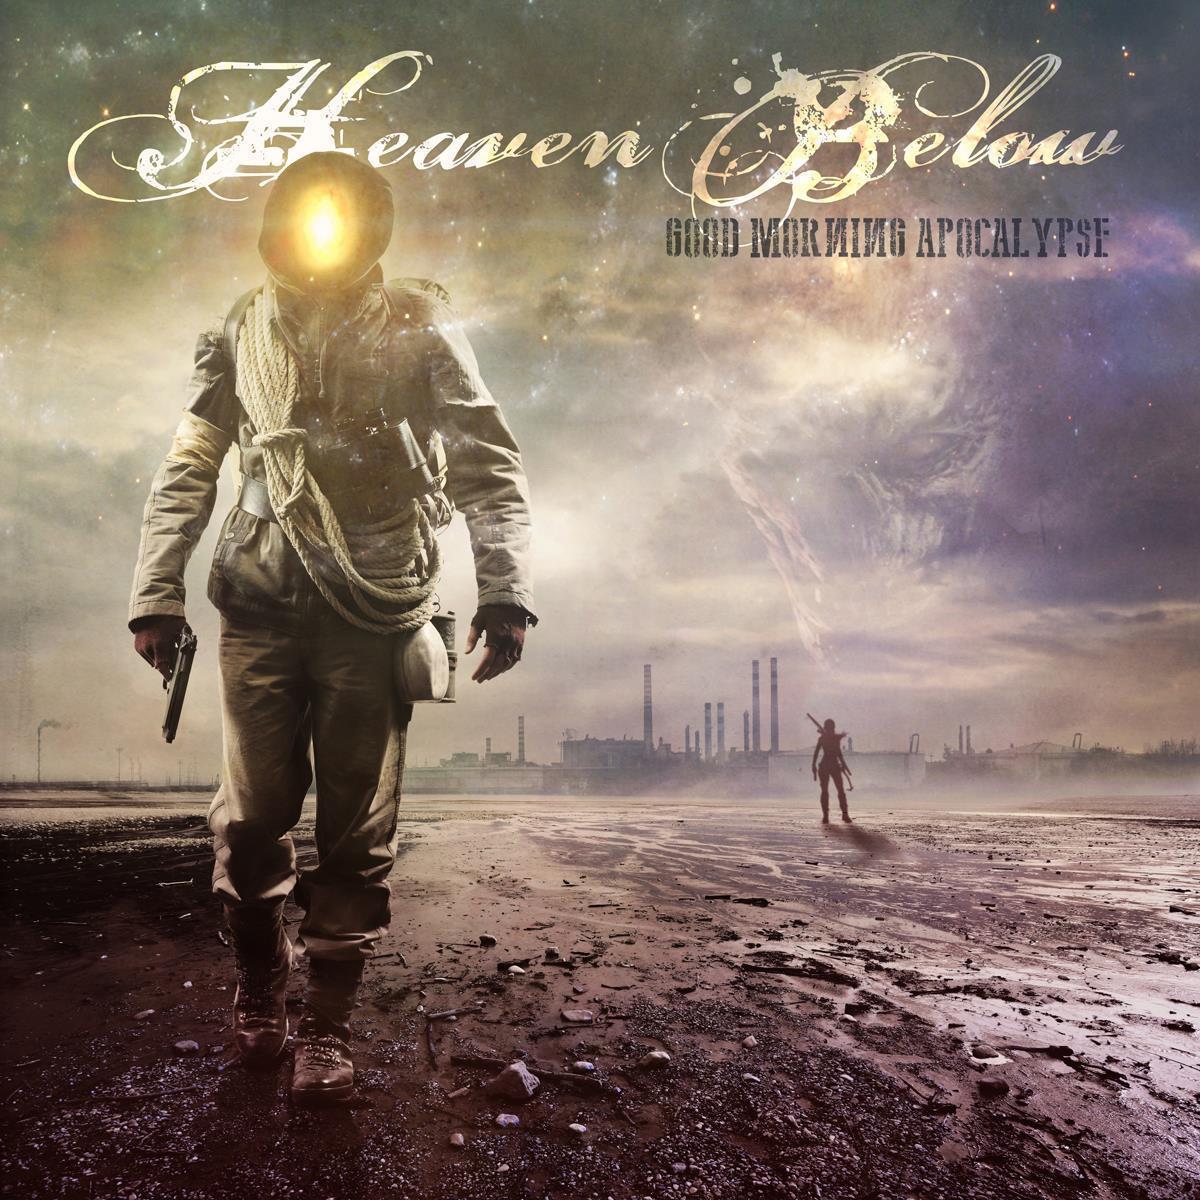 Heaven Below – Good Morning Apocalypse